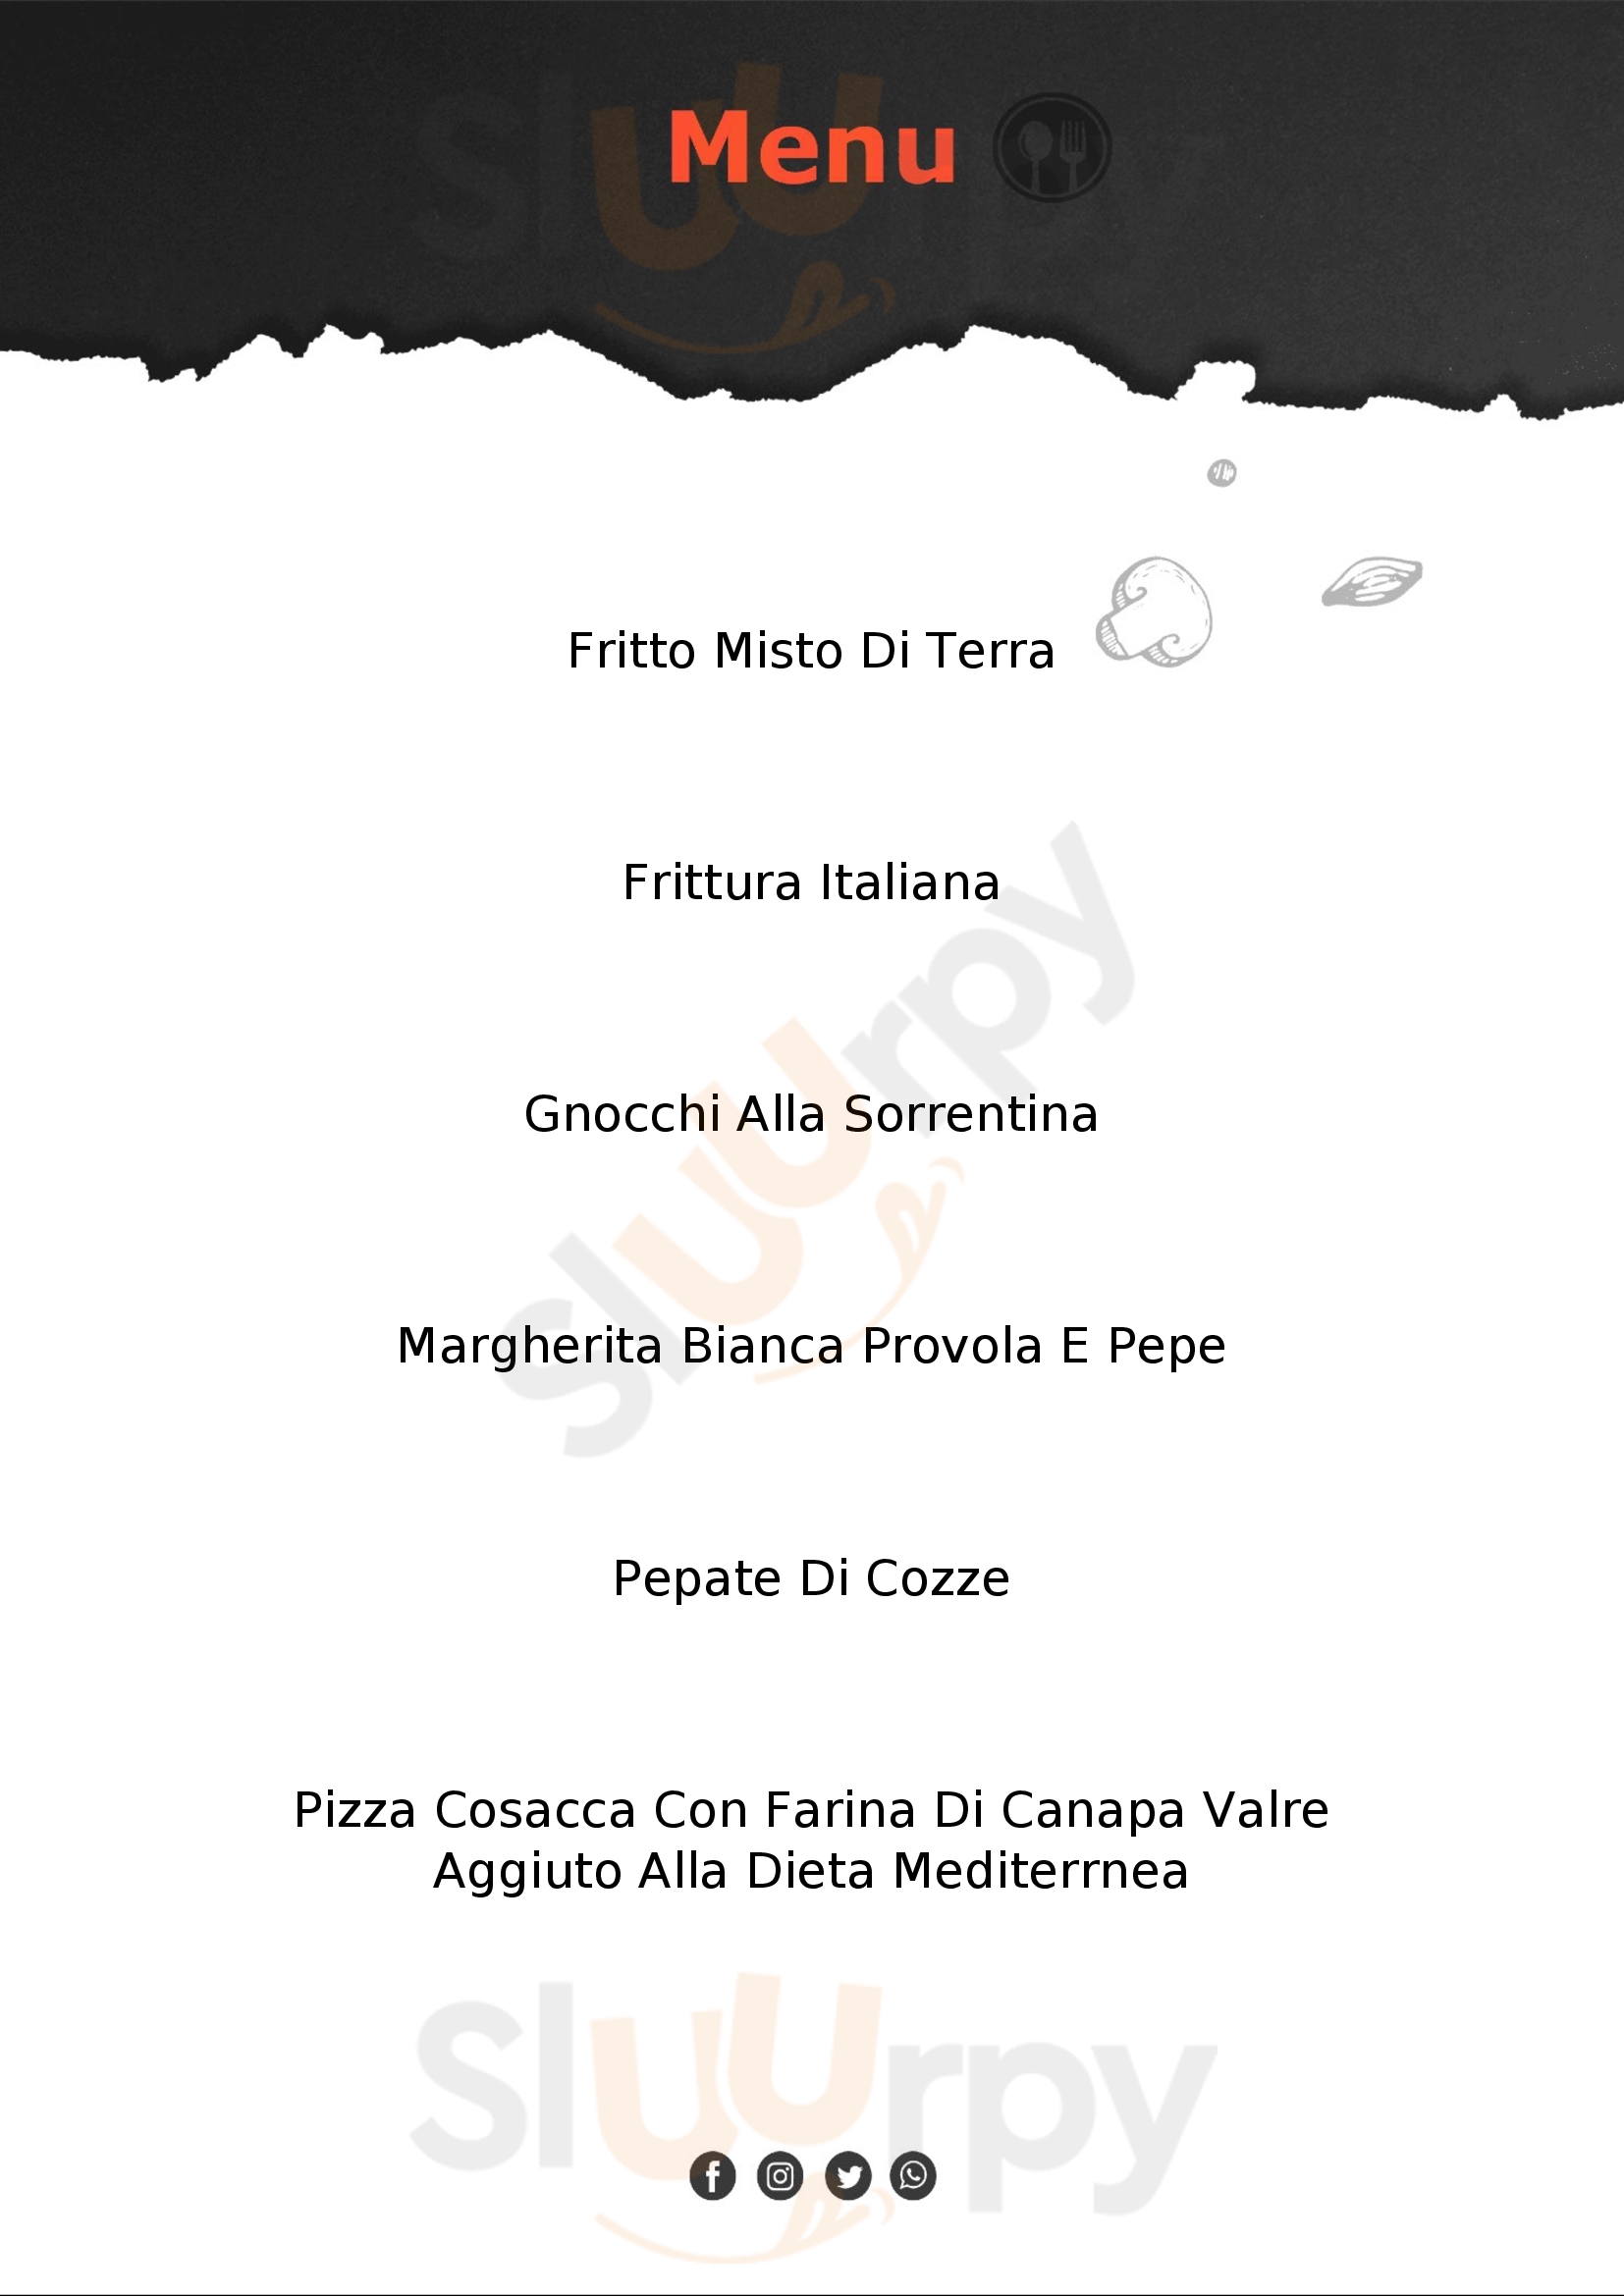 Ristorante e Pizzeria da Don Paolo San Giorgio a Cremano menù 1 pagina